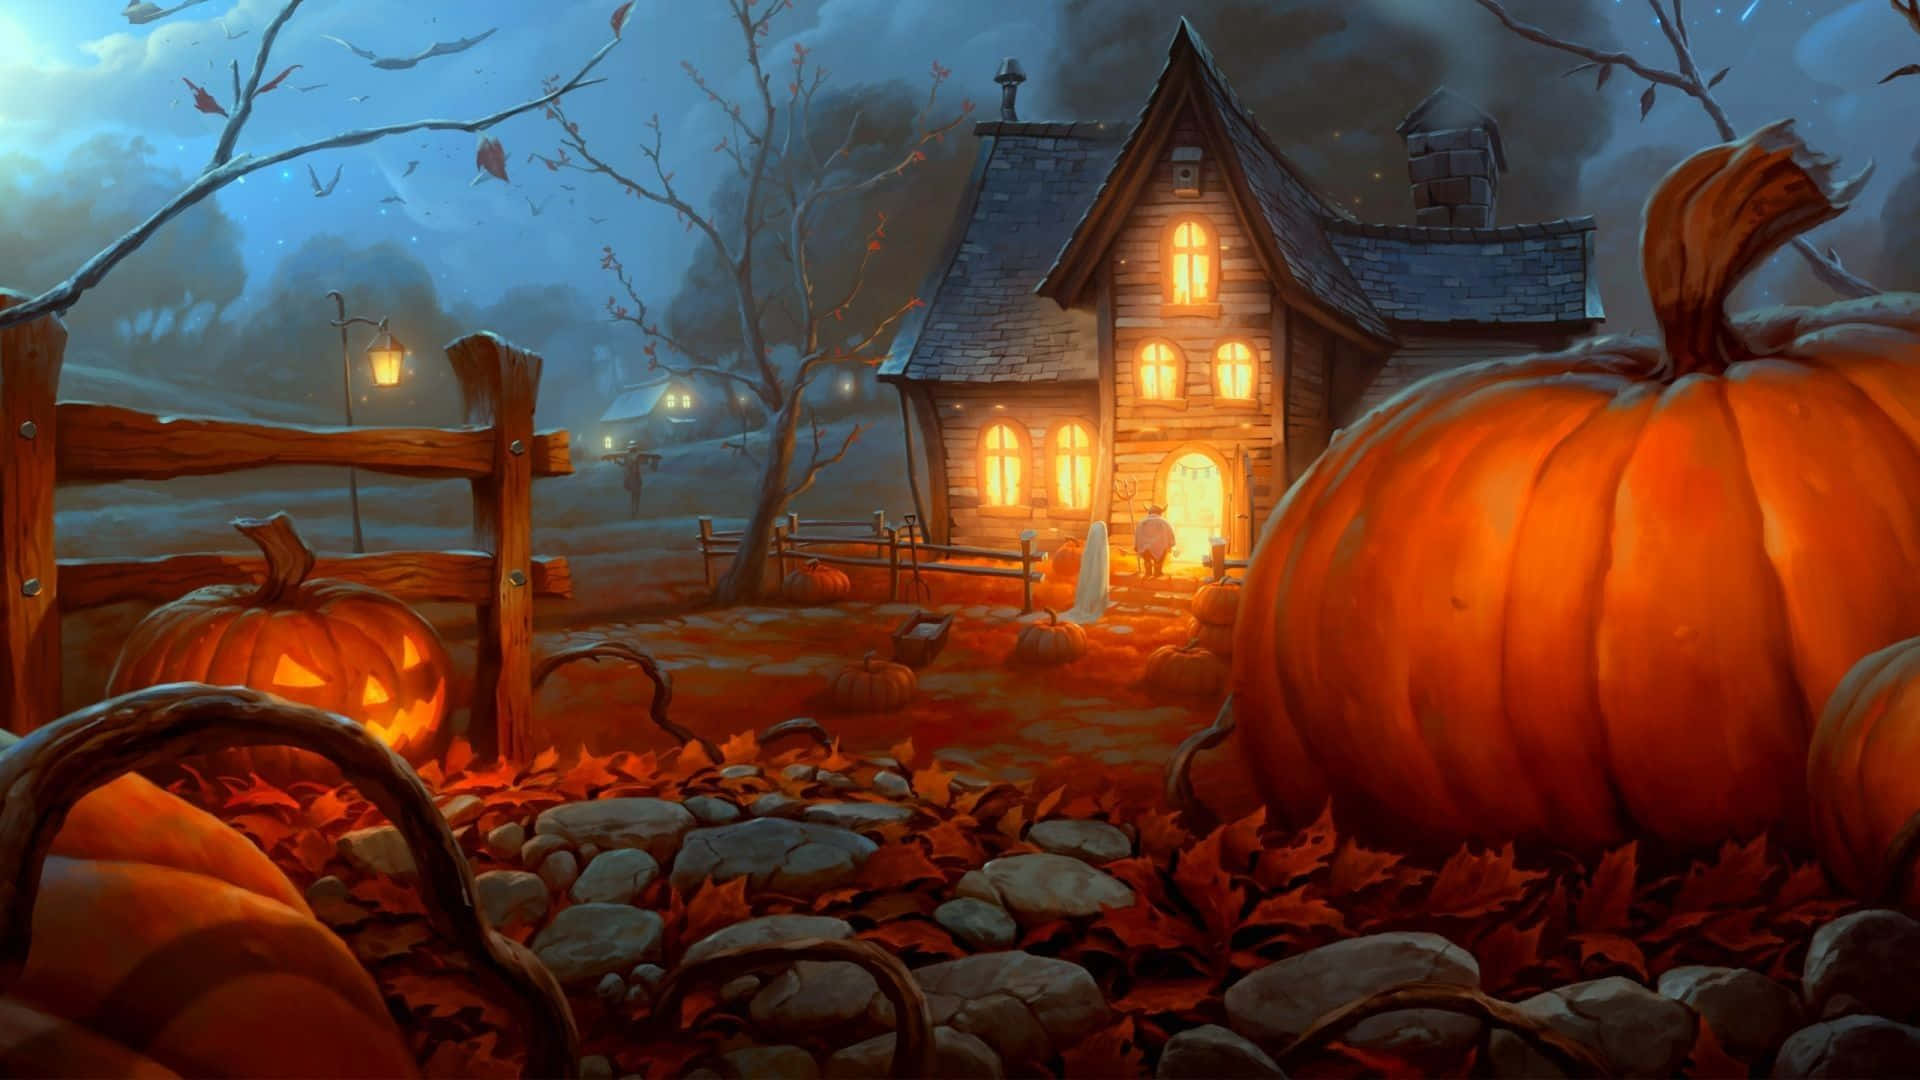 Celebrate Halloween with an enchanting festive pumpkin image. Wallpaper